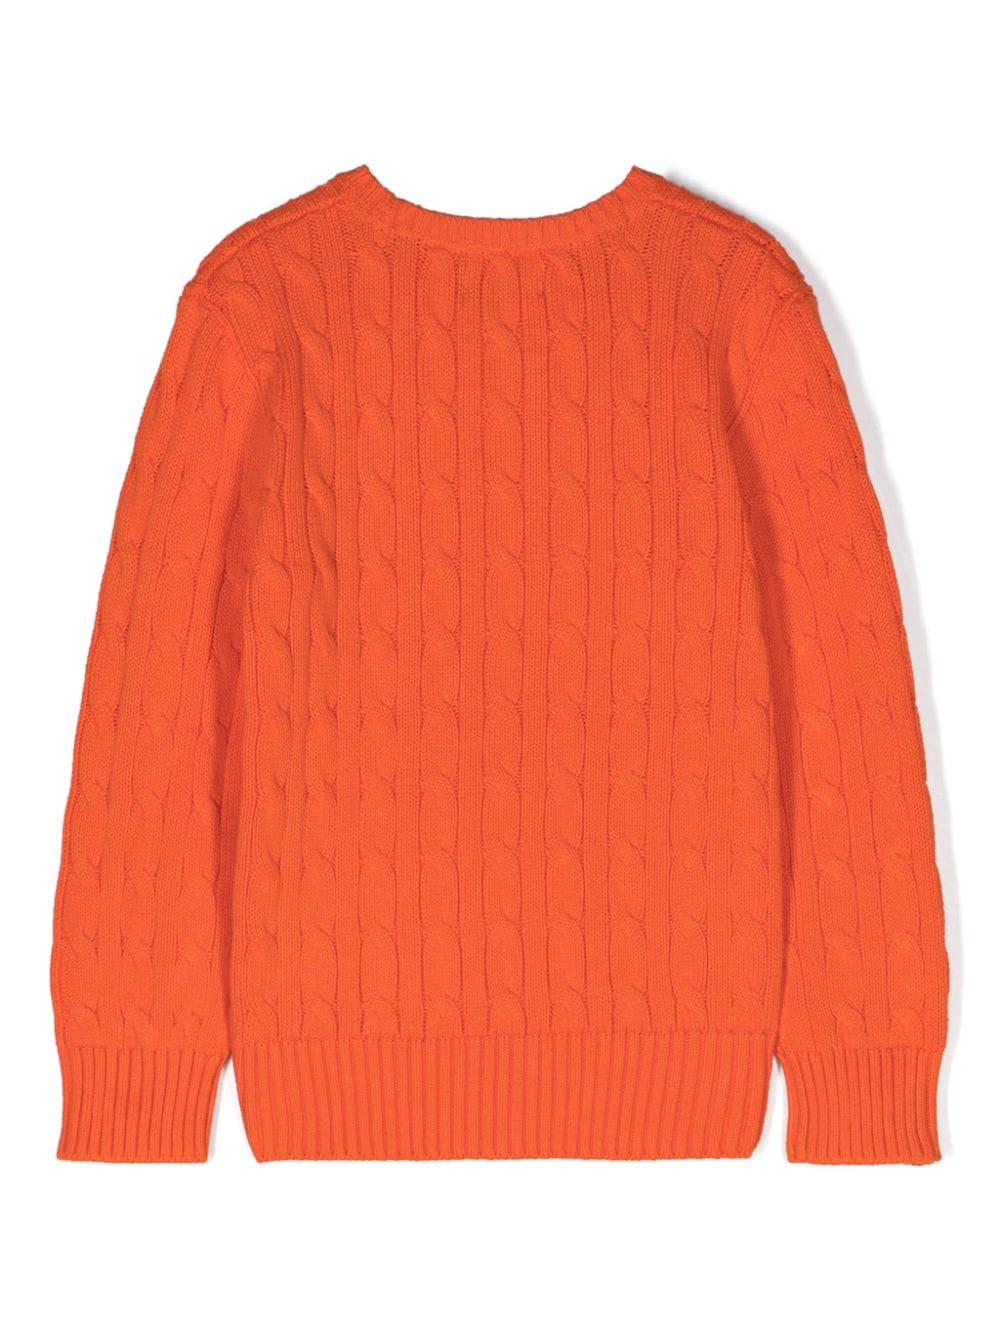 Orange sweater for boys with logo